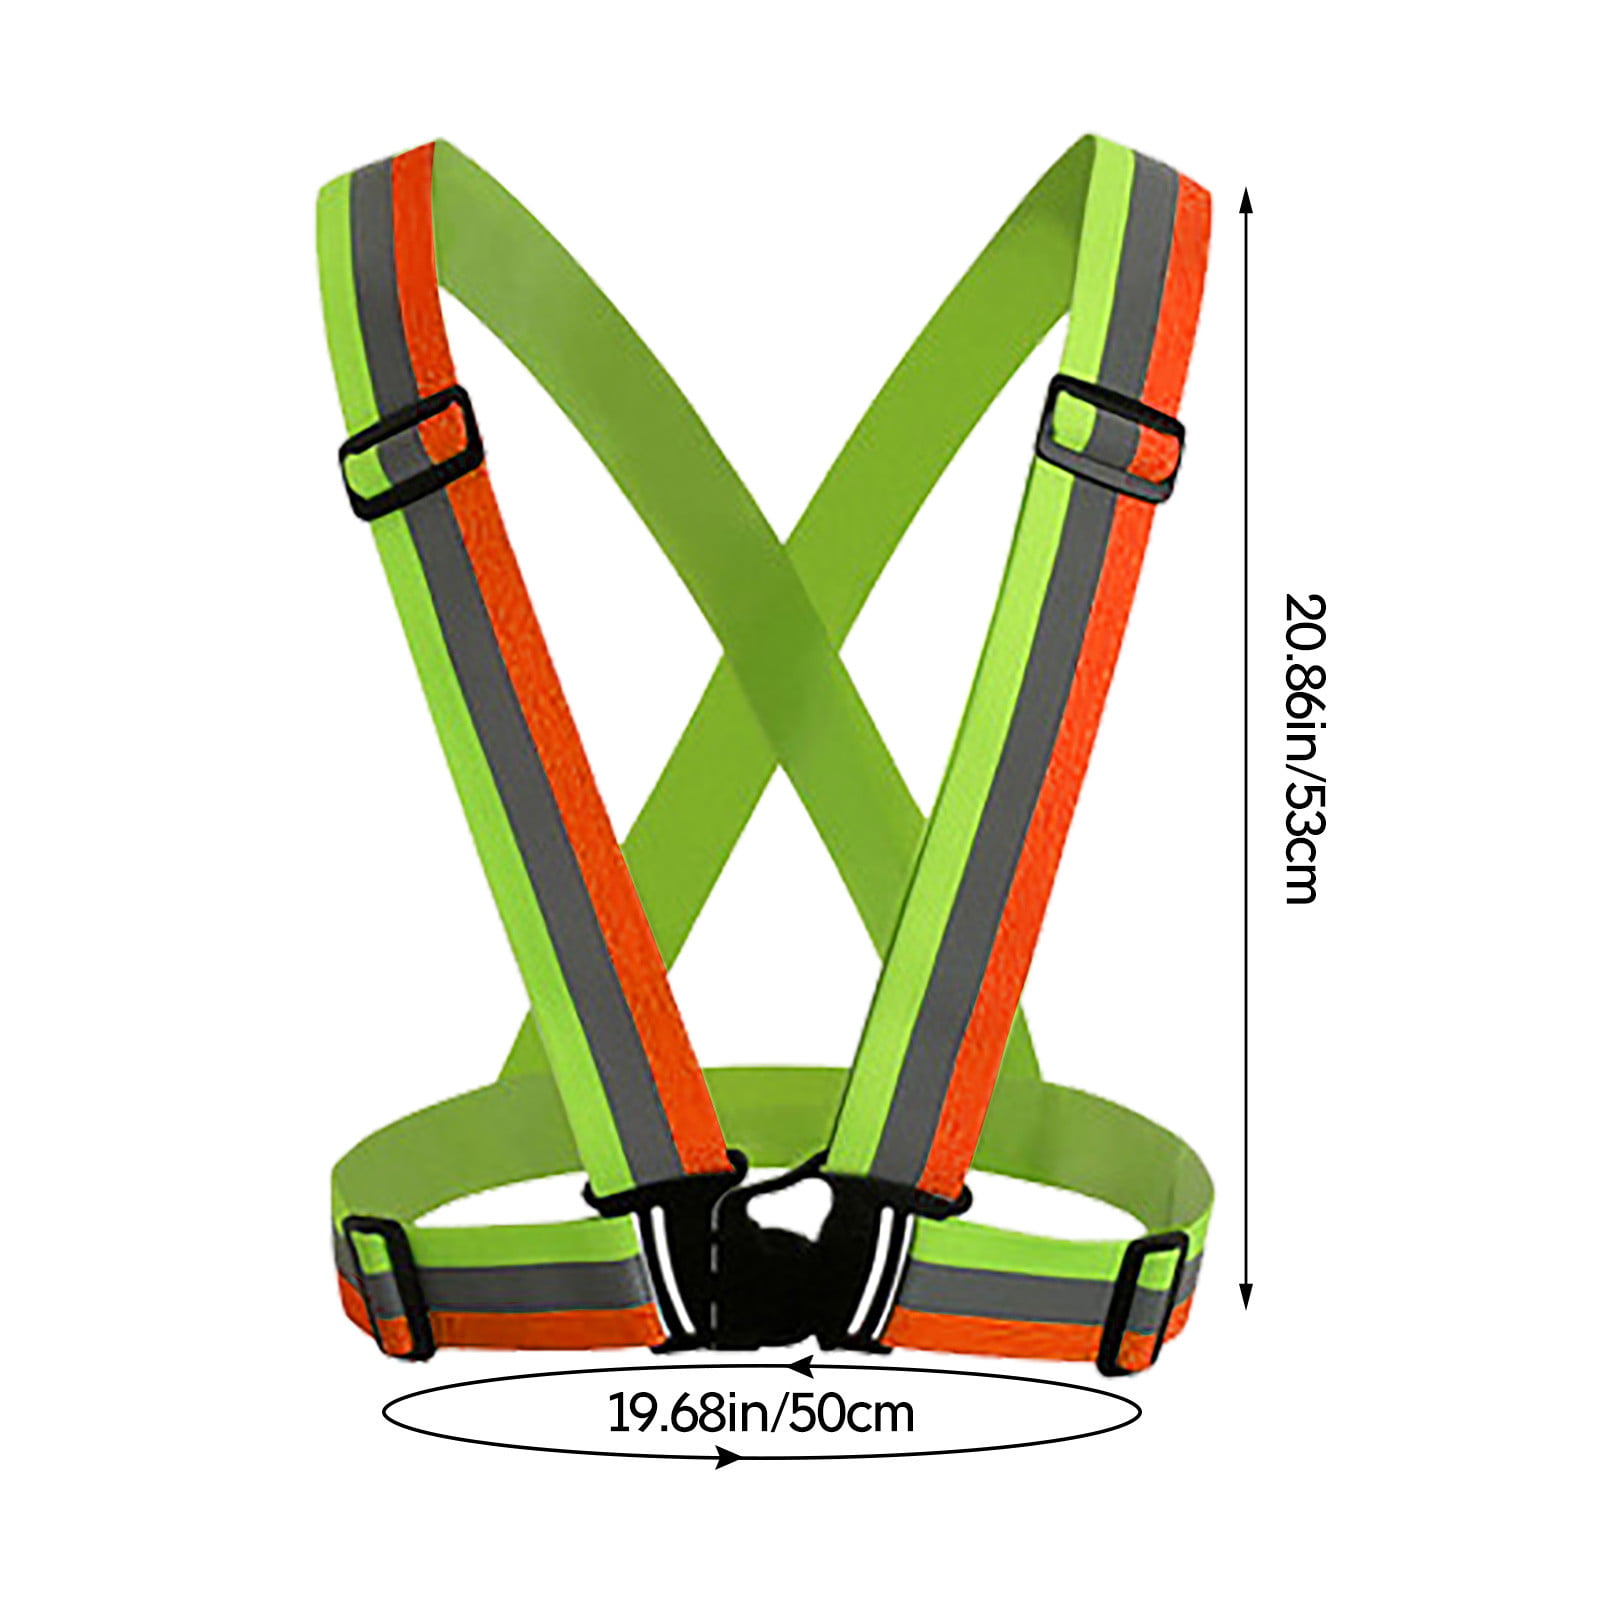 Visibility Neon Vest Reflective Belt Safety Vest Fit for Running Hiking Sports 